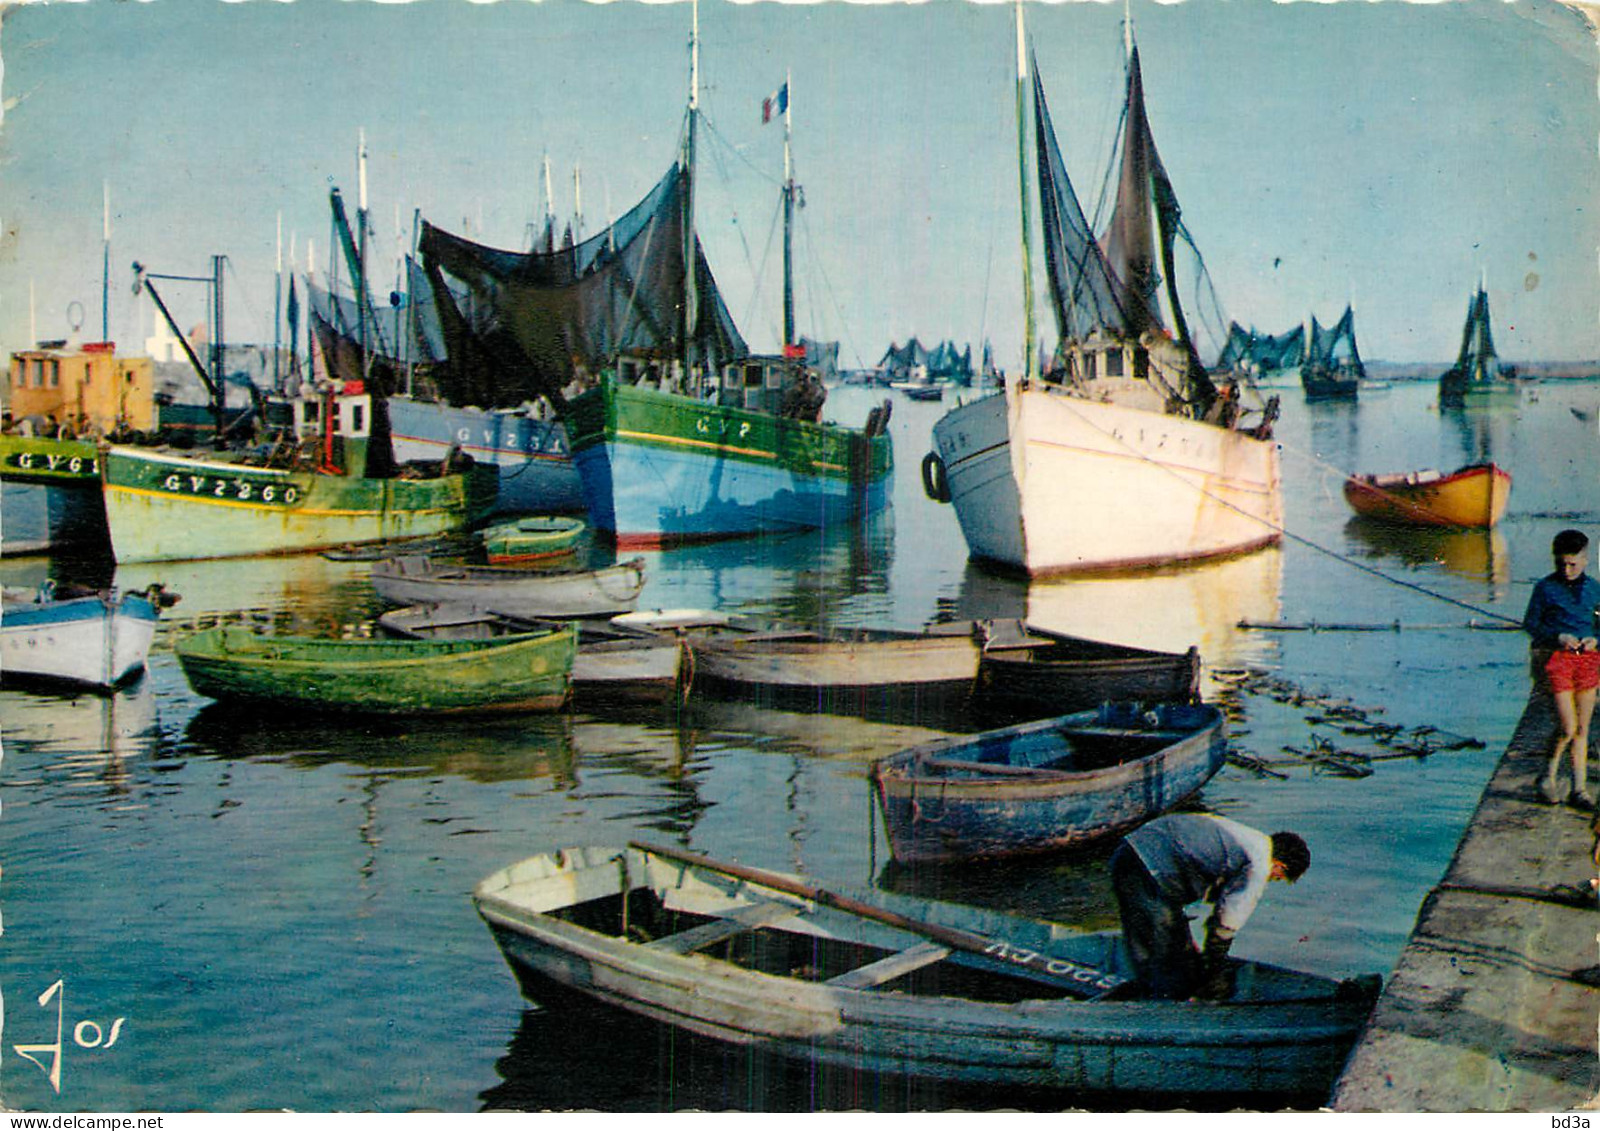  BATEAUX DE PECHES EN BRETAGNE - Fishing Boats